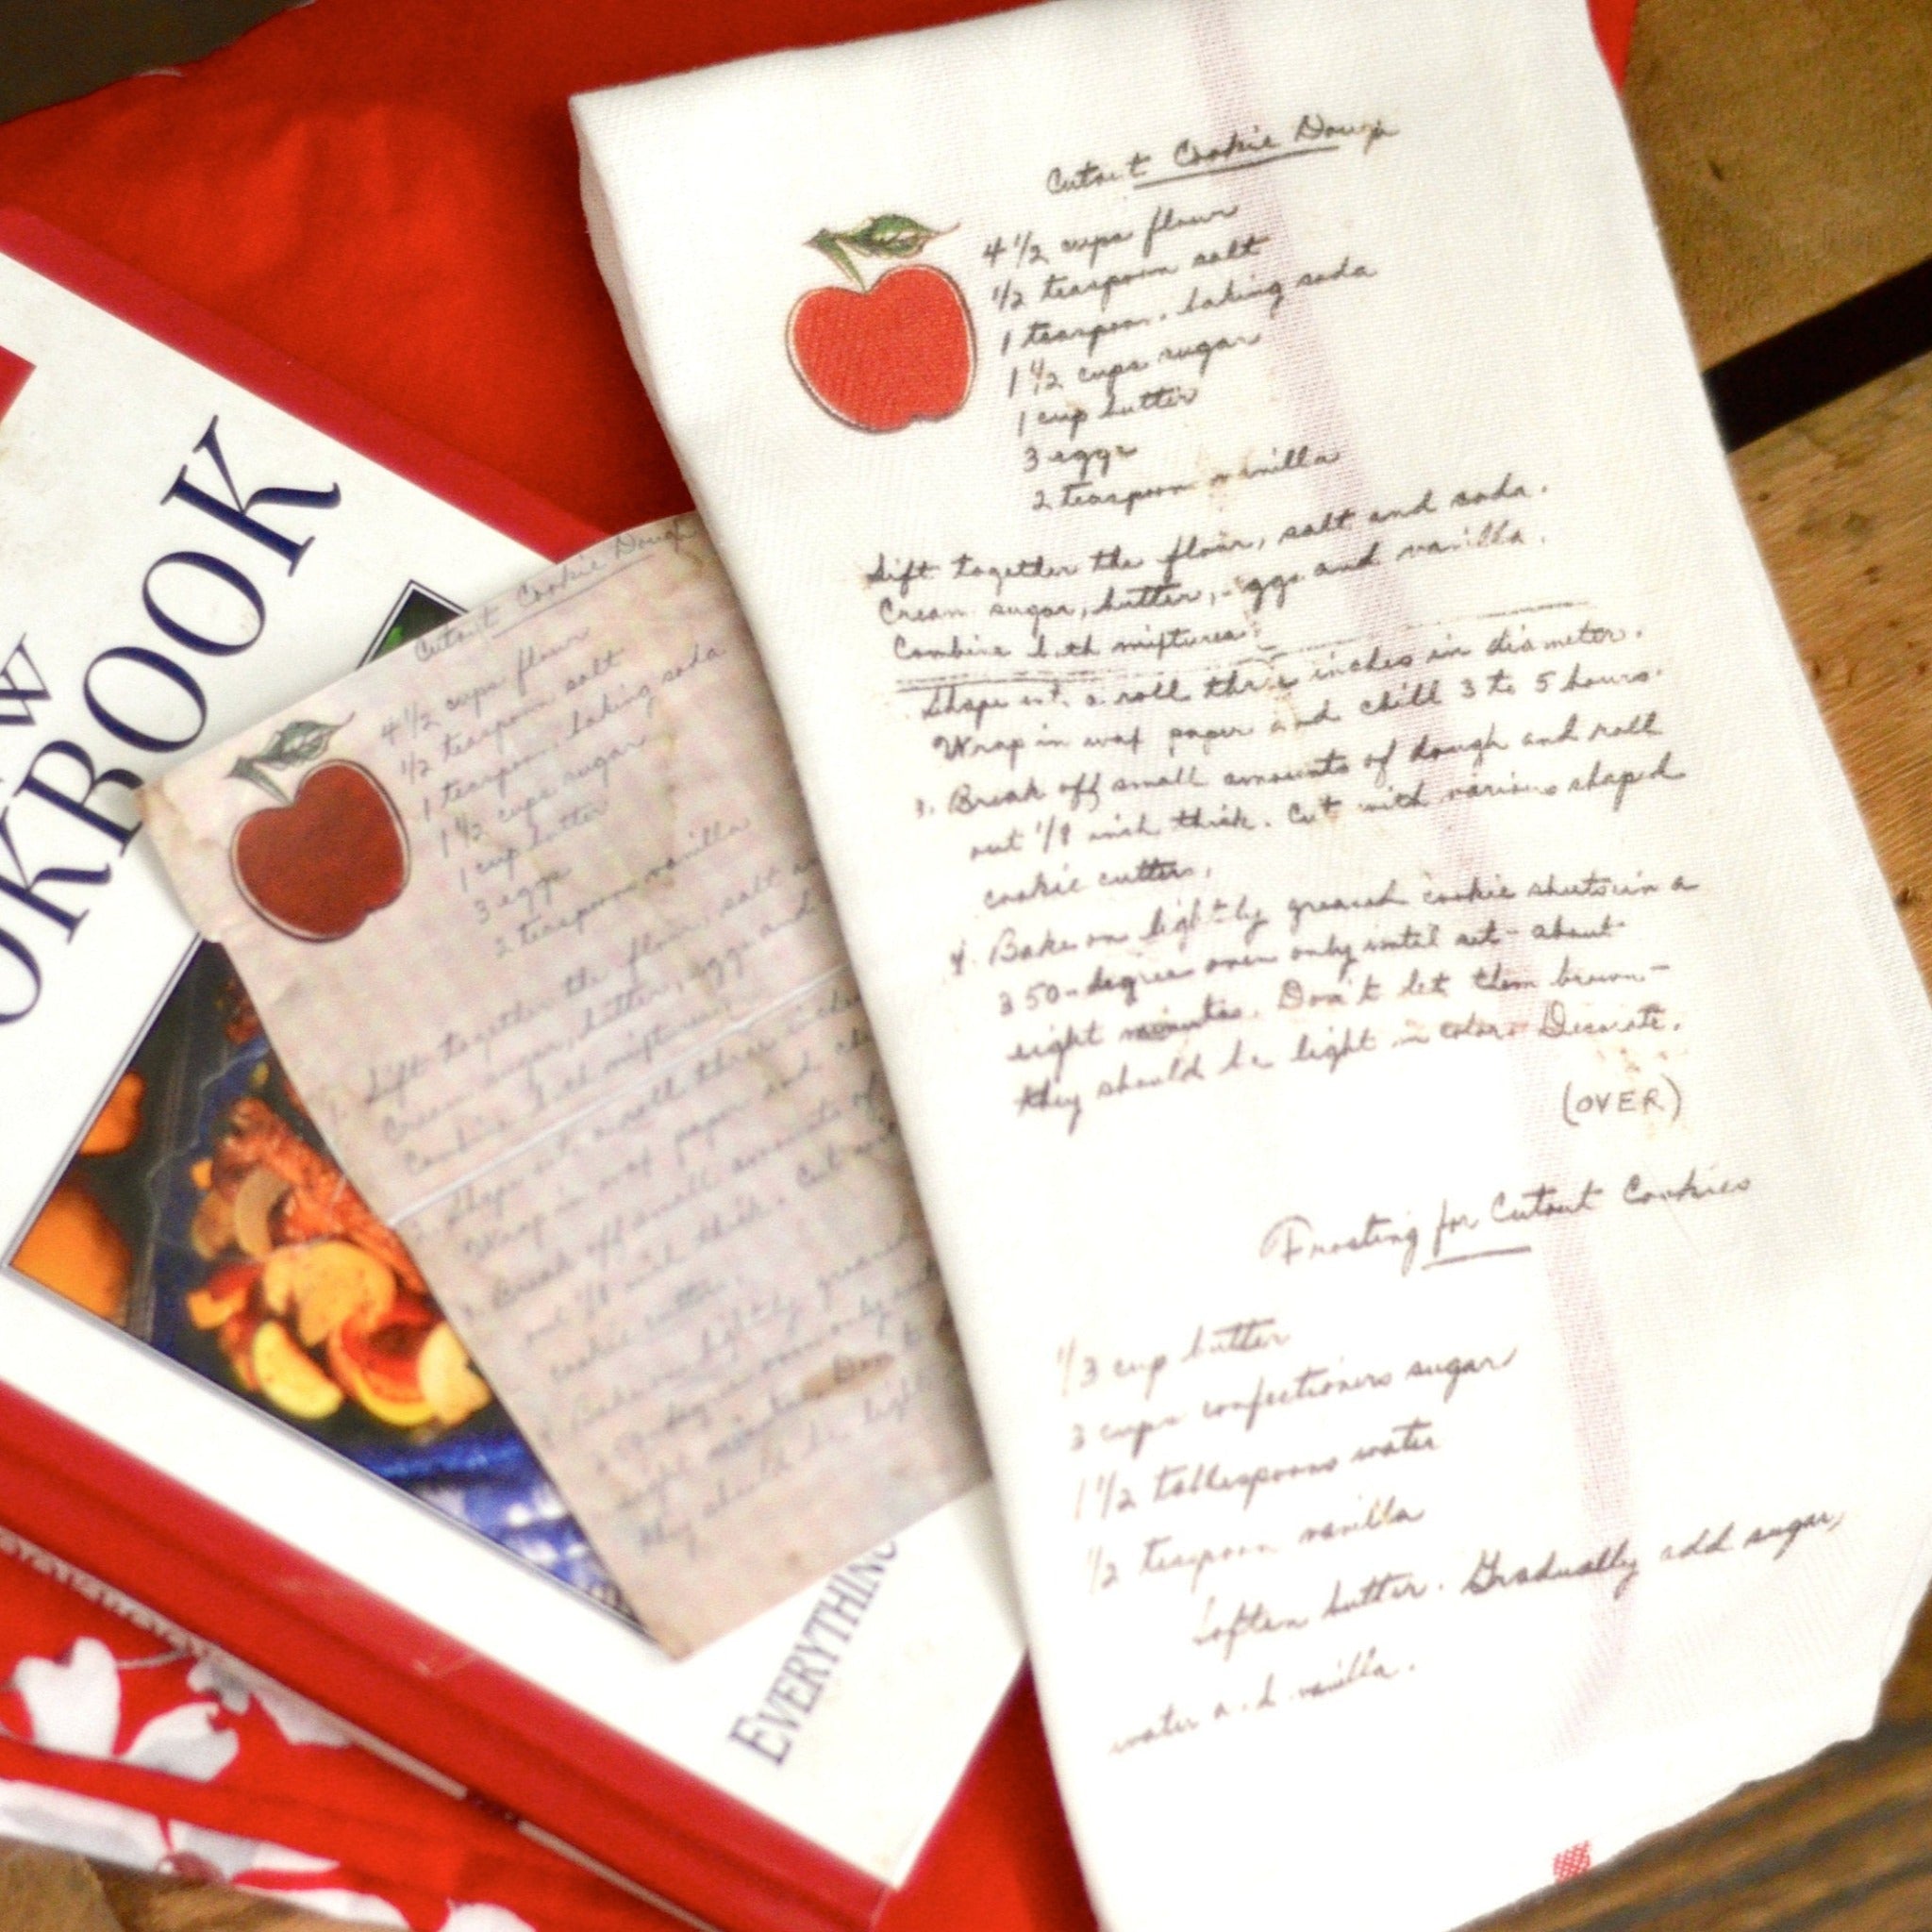 Heirloom Recipe Tea Towel with Original Handwriting